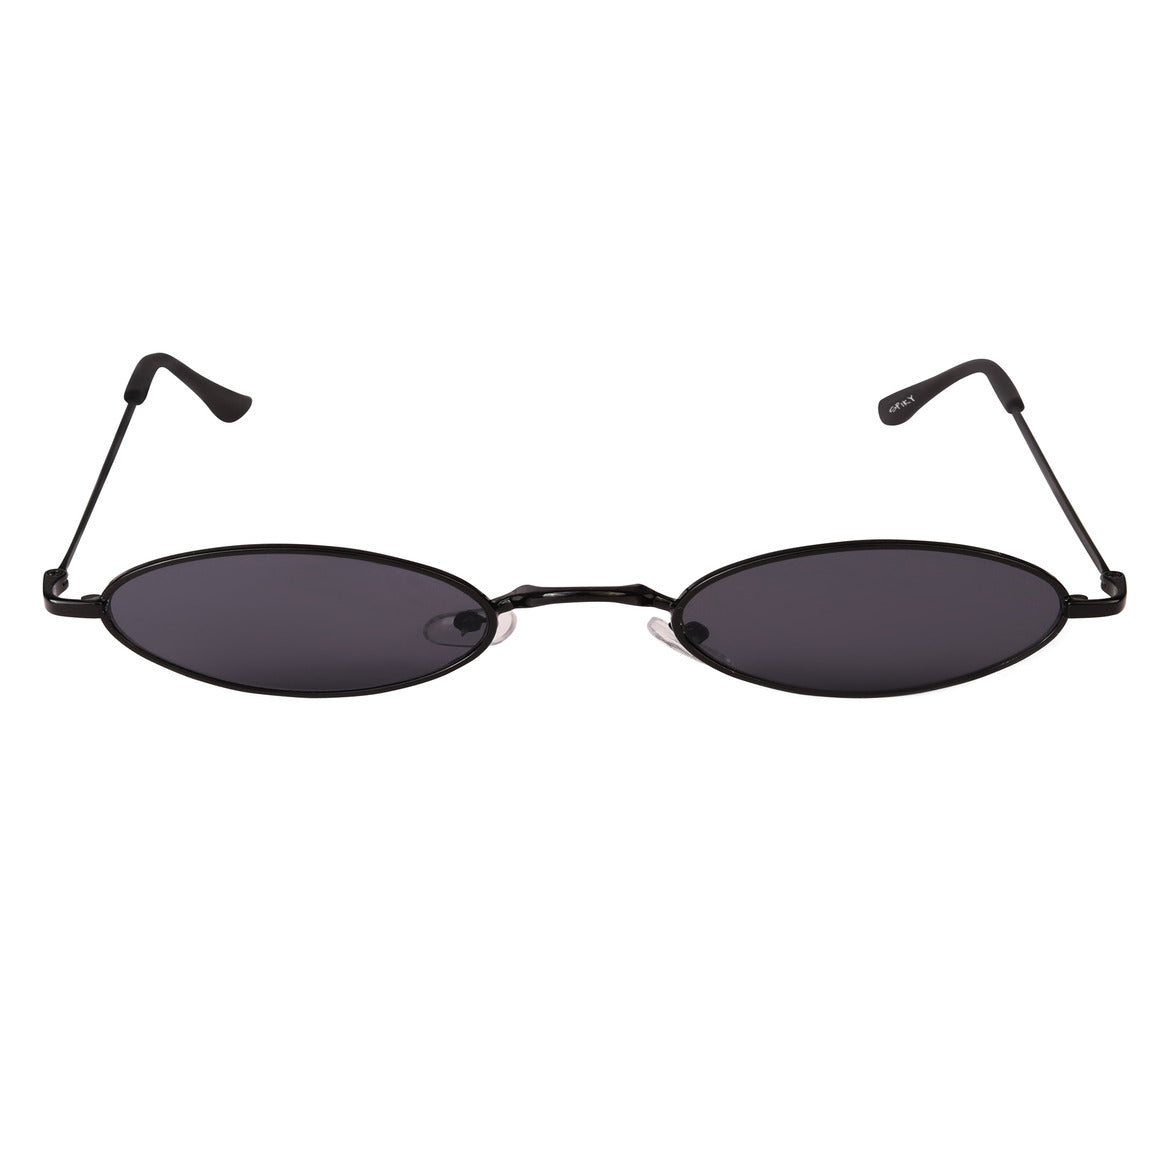 Spiky 100 % UV Protection Oval Sunglasses - Black